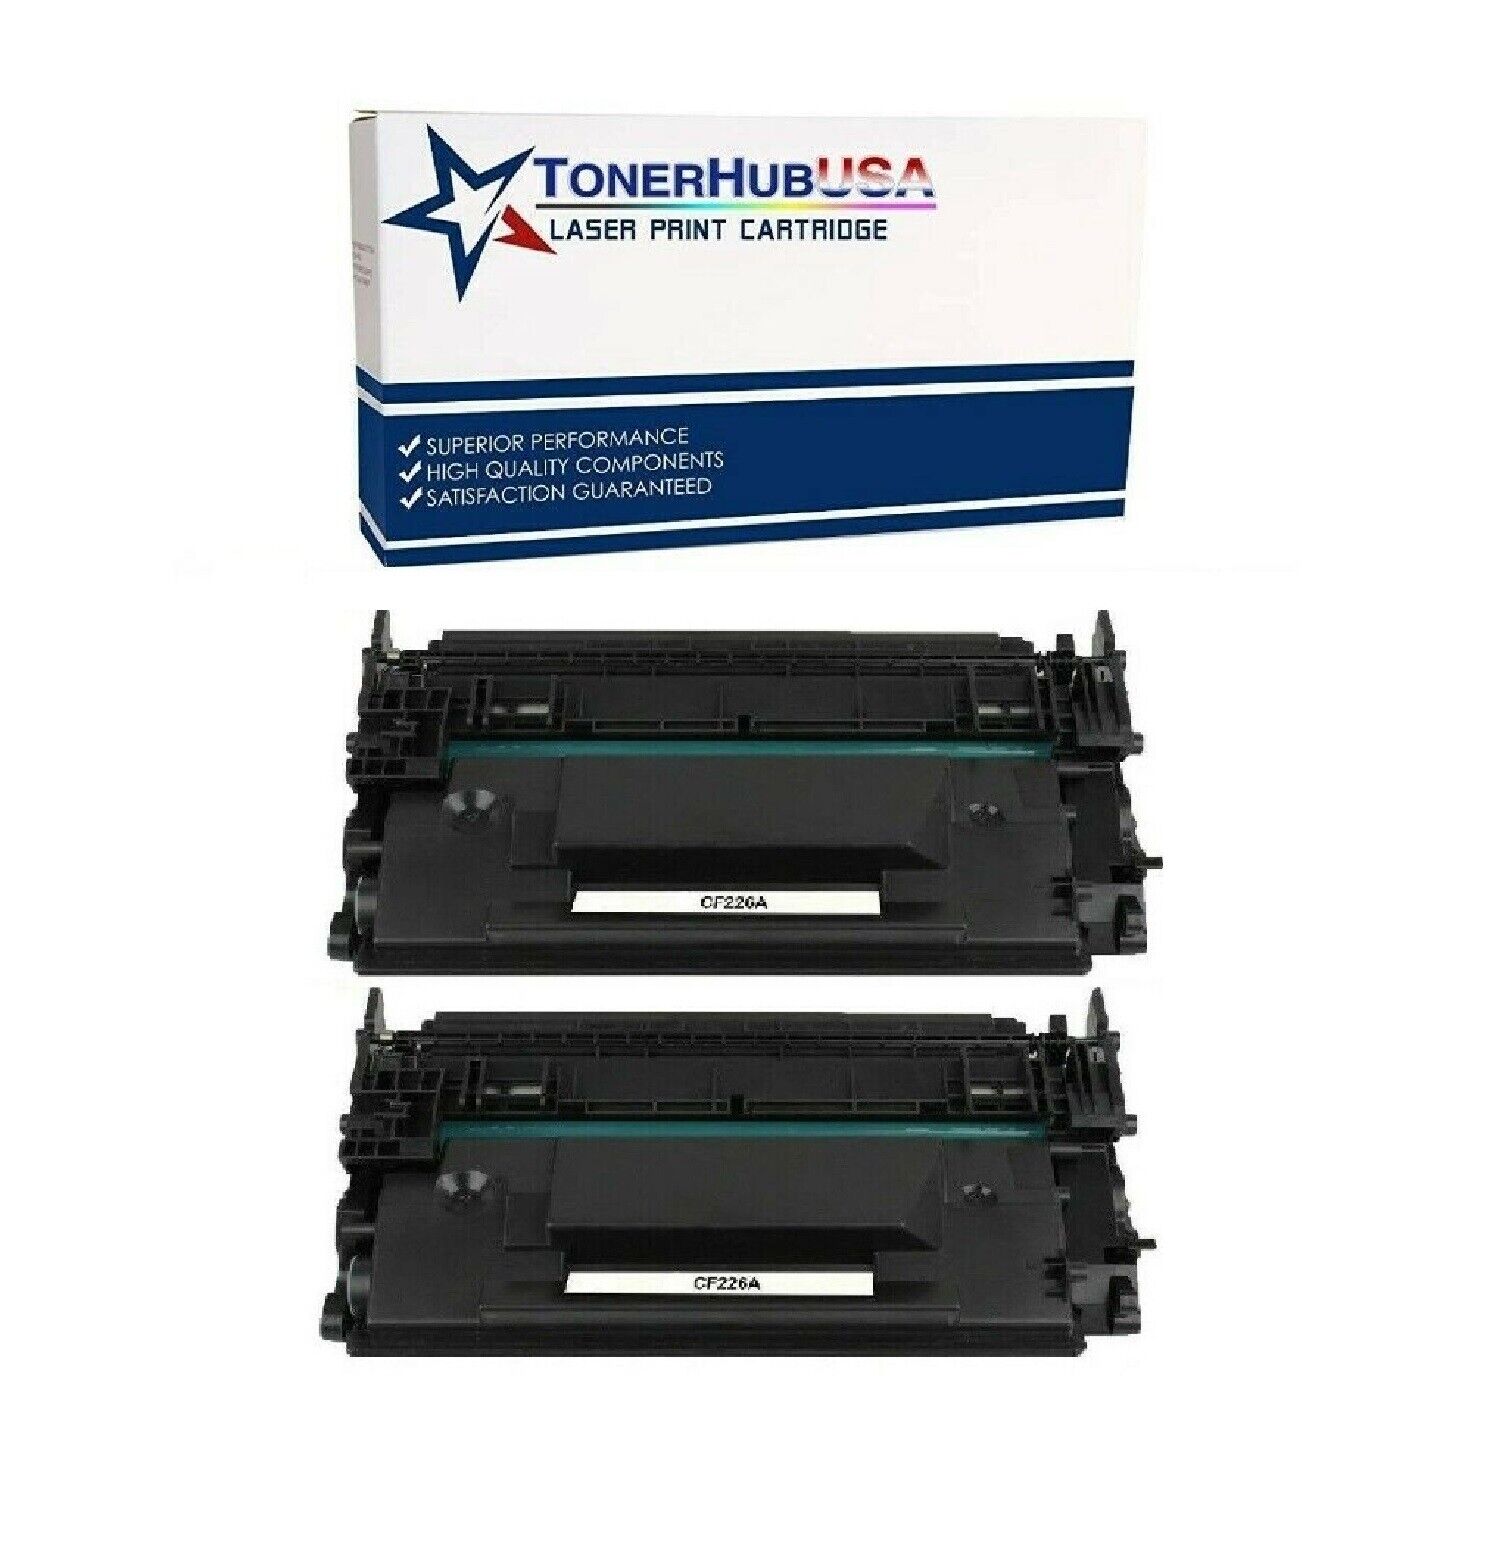 2 Black CF226X 26X High Yield Toner Cartridge fit HP LaserJet Pro M402, MFP M426